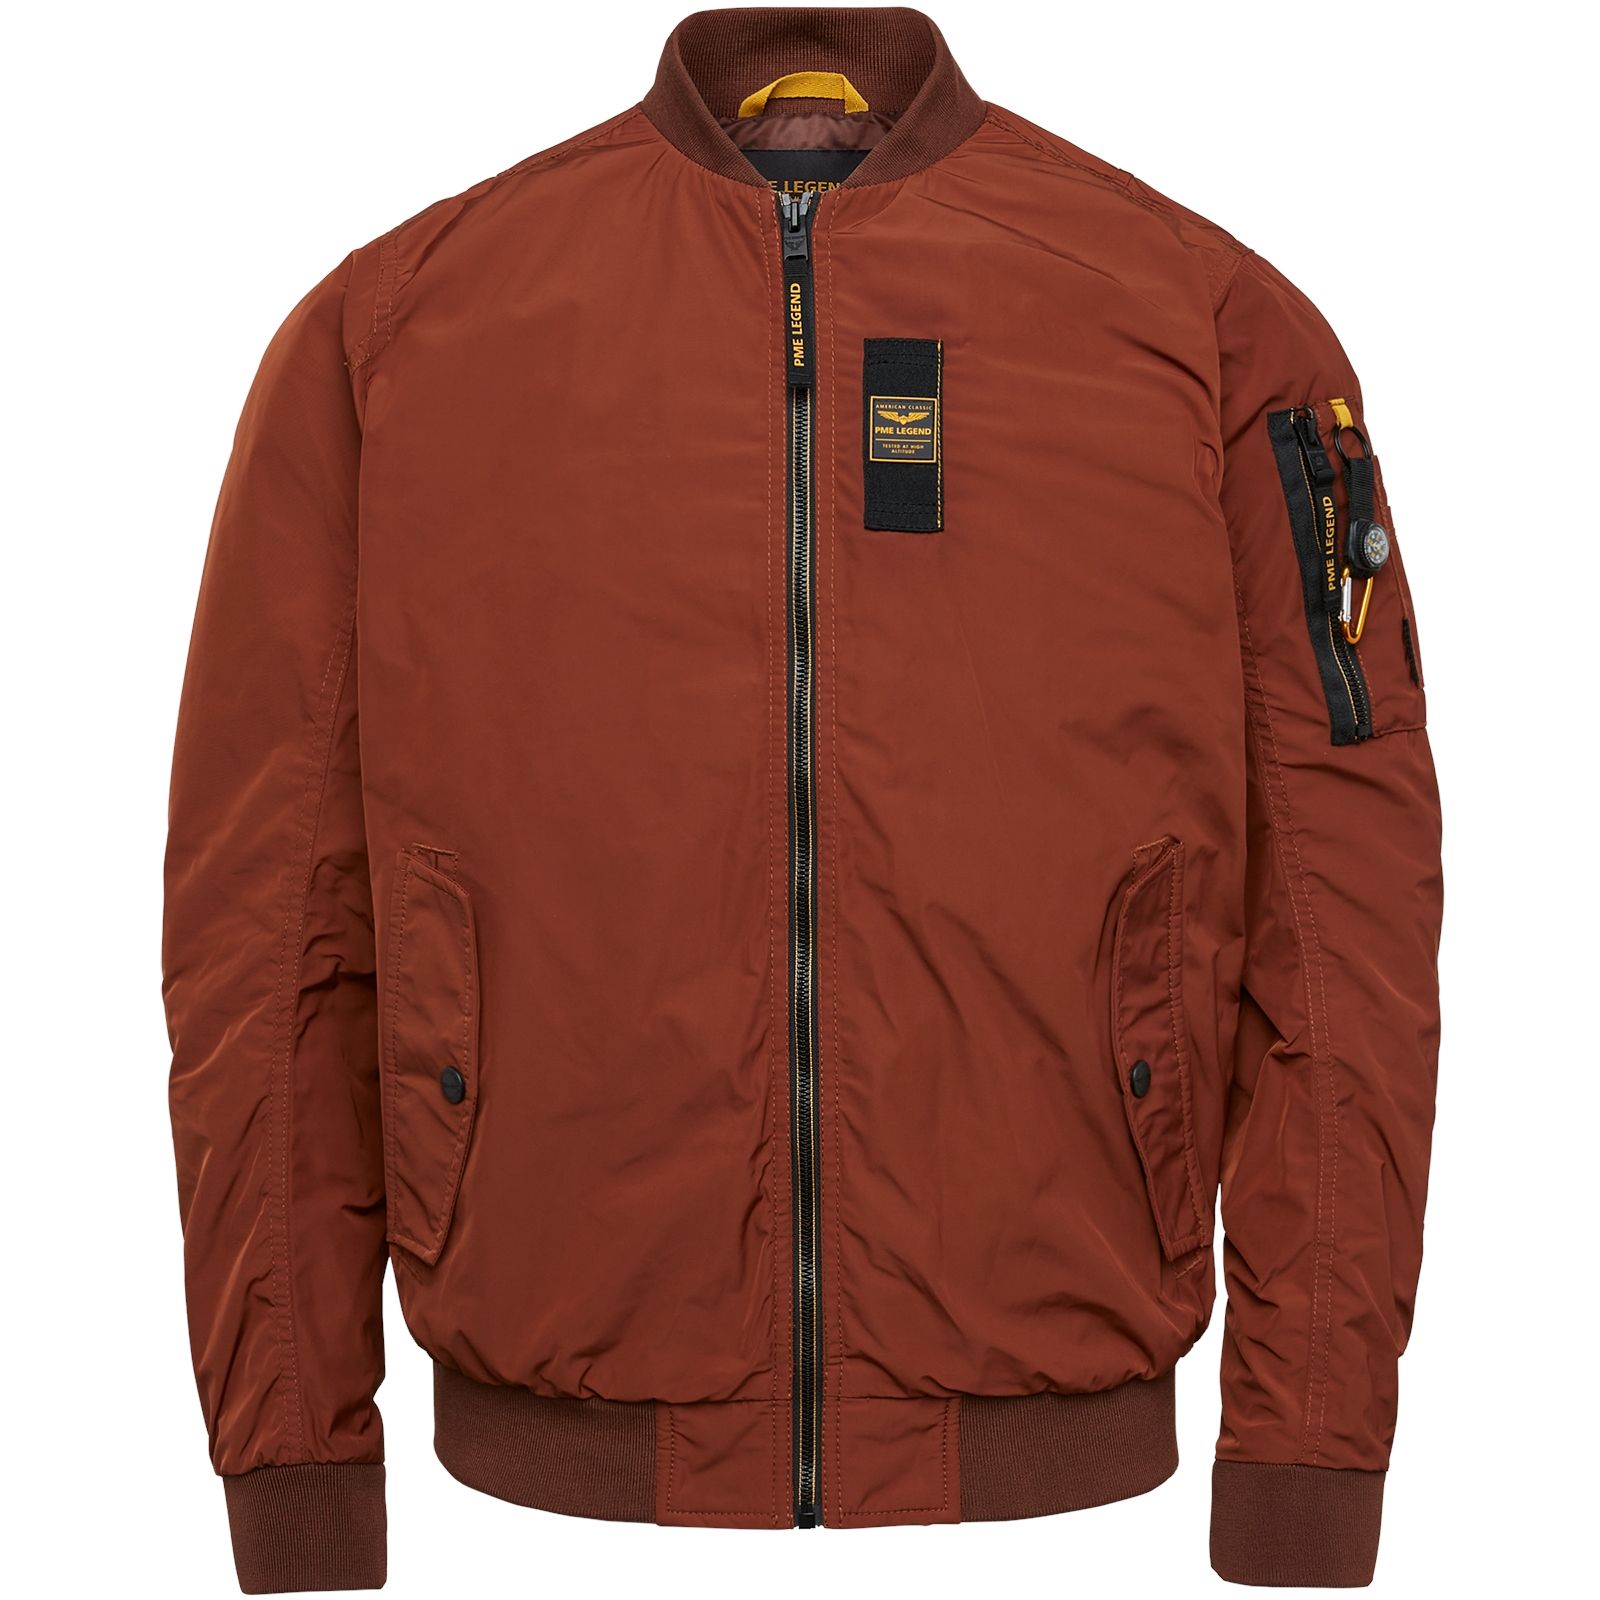 Pme Legend Bomber jacket GLAZER 2.0 Flighter Brandy Brown 00102530-8253